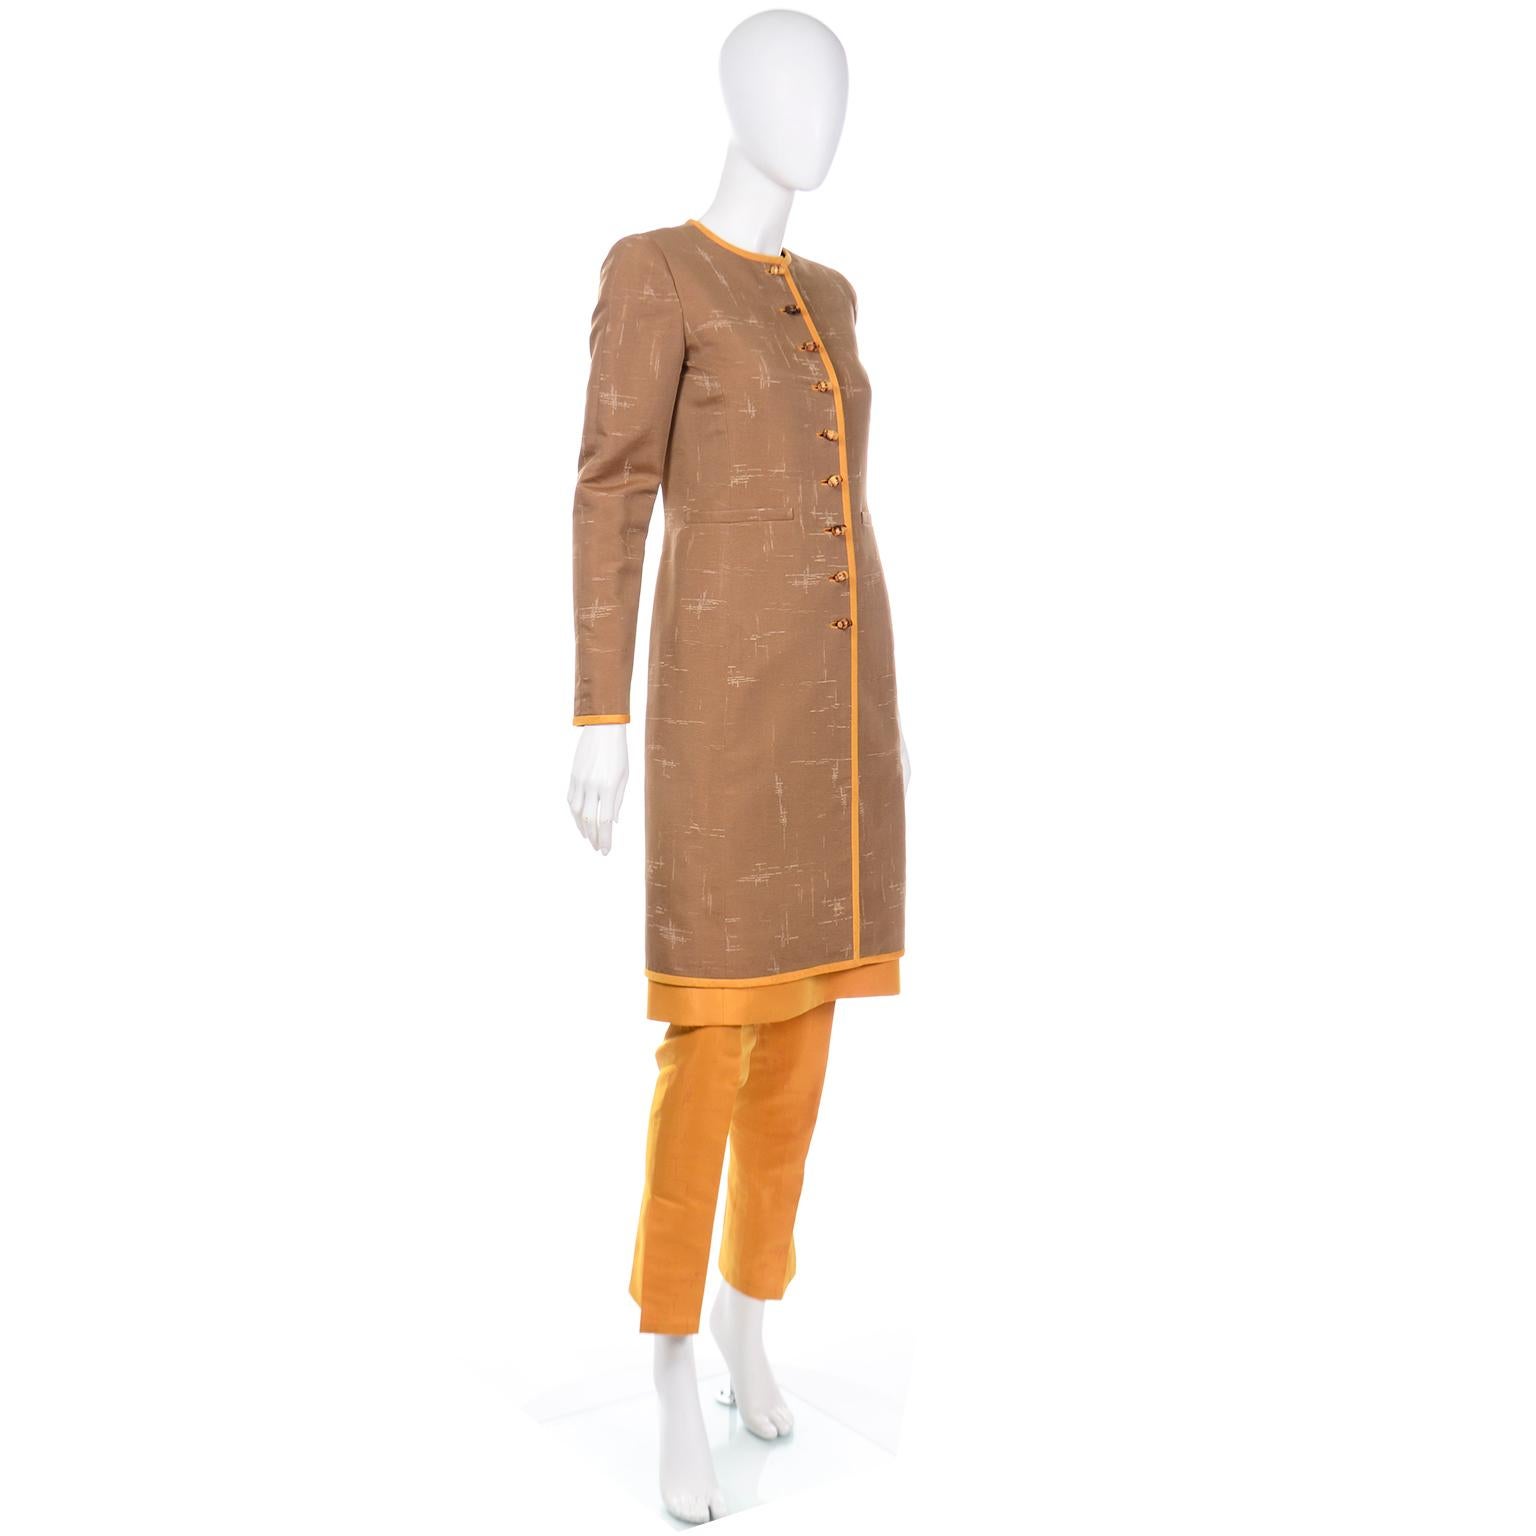 Oscar de la Renta 1990s Vintage 1960s inspired Coat Pants and Dress Outfit For Sale 2